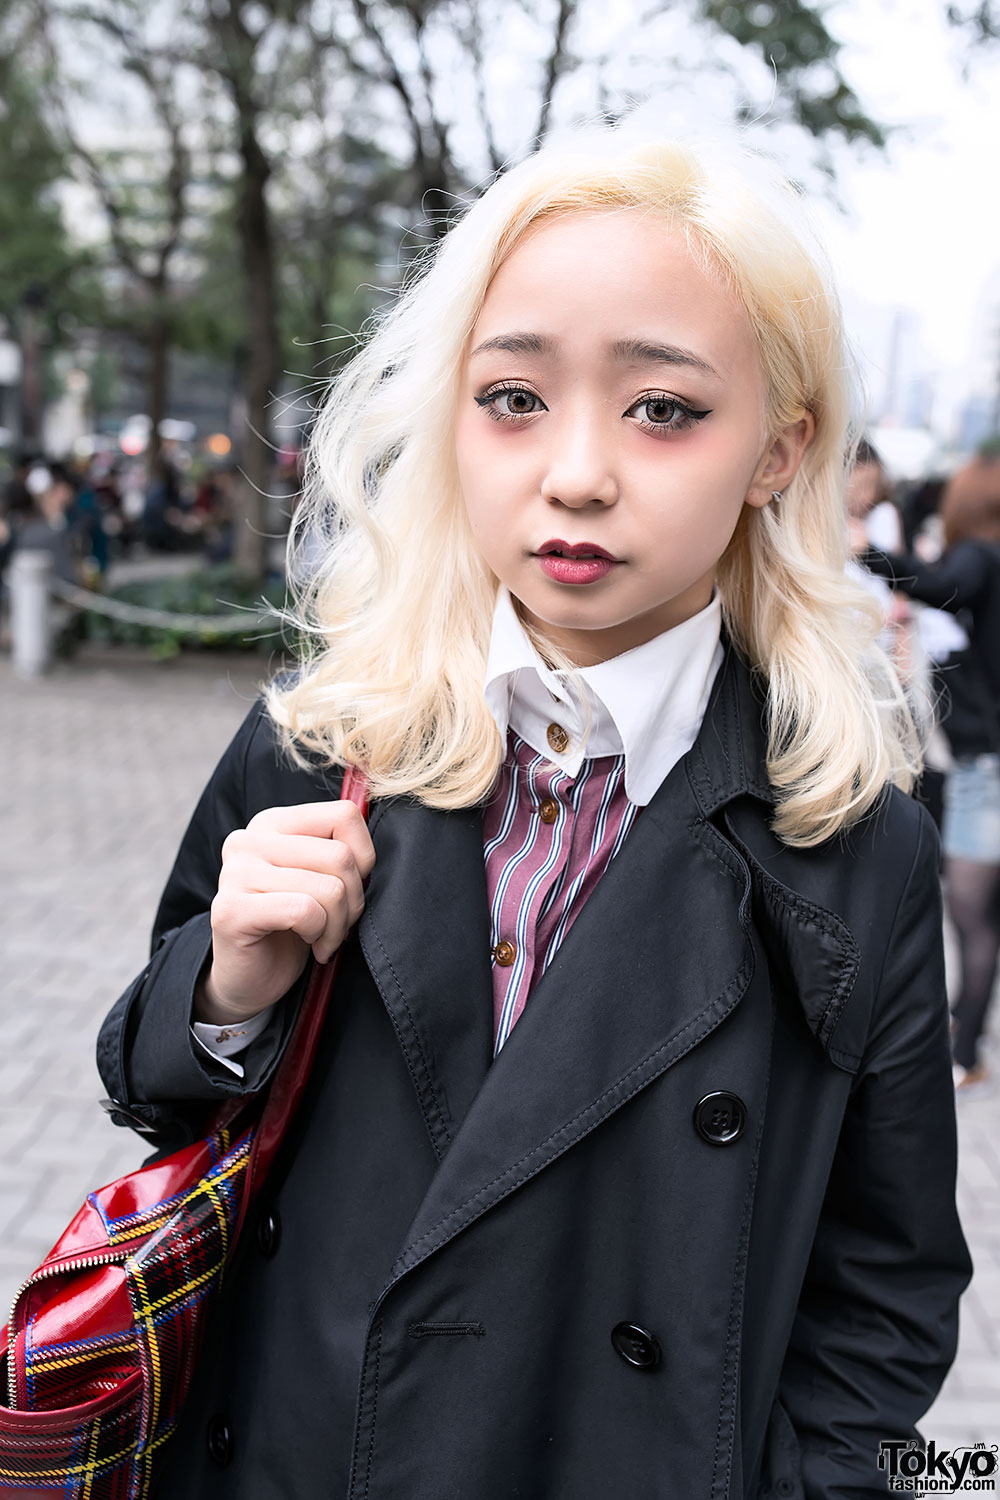 Japan Blonde 56